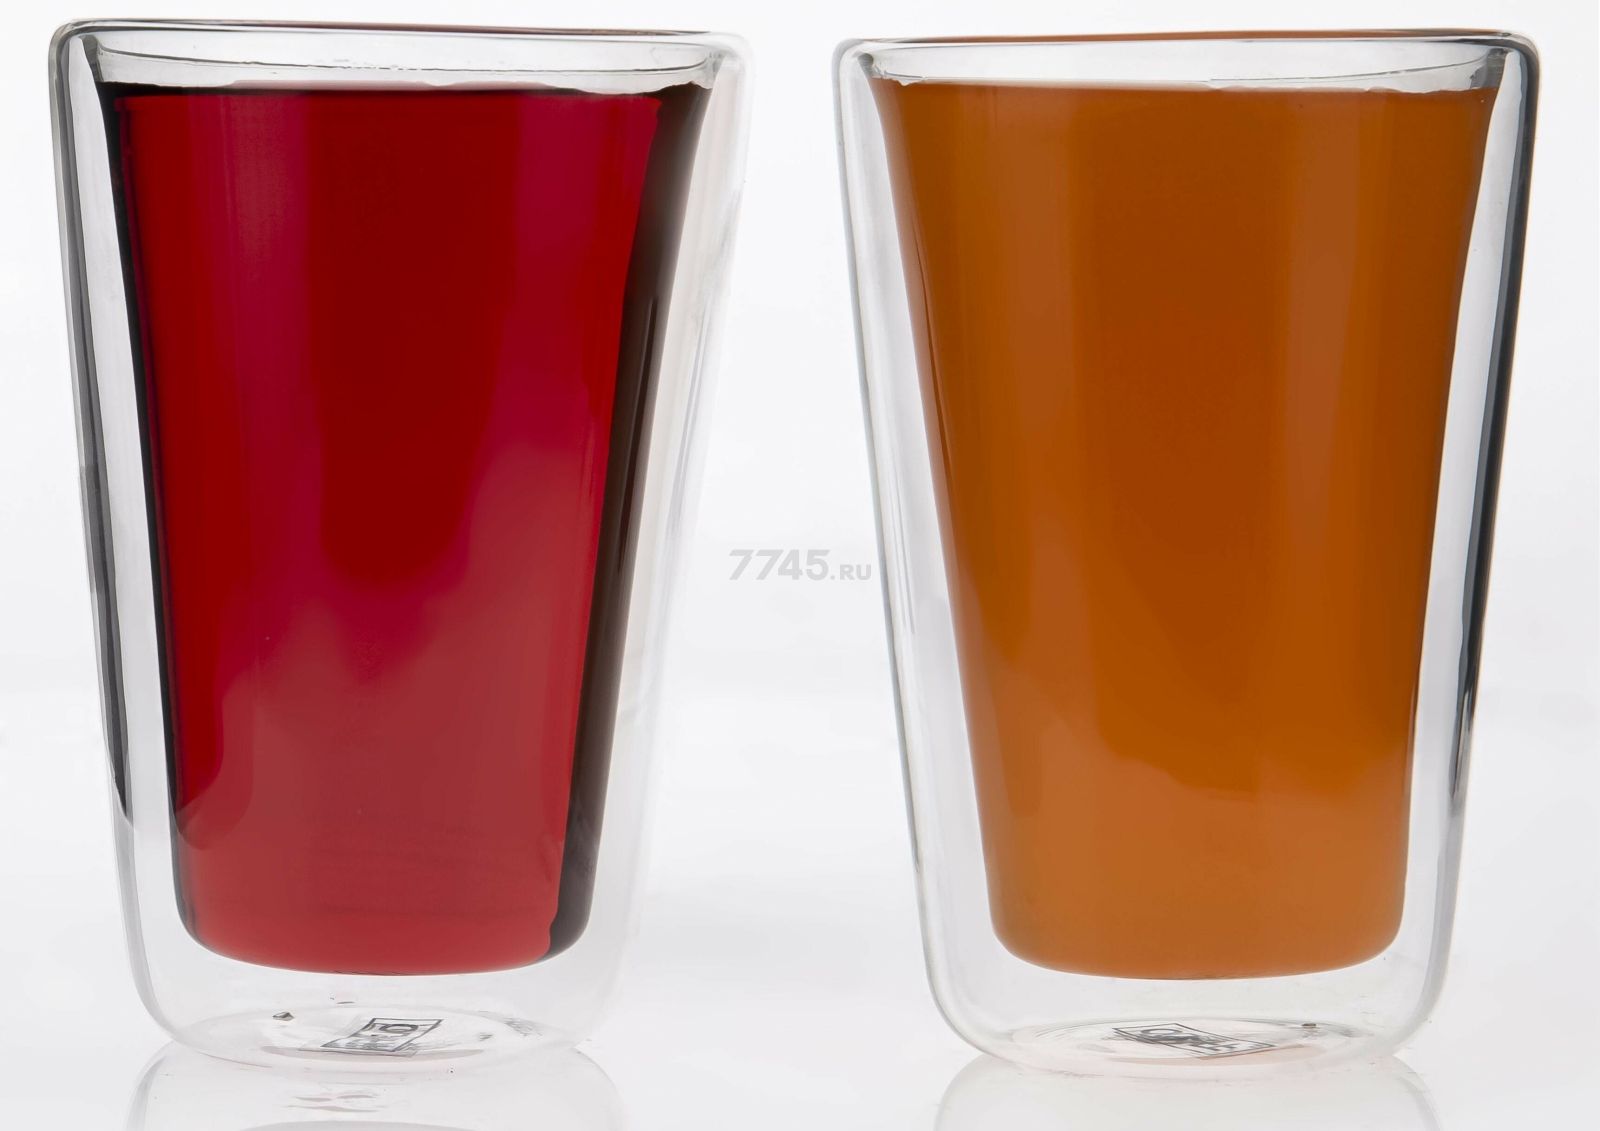 Набор стаканов OLAFF Sweet home с двойными стенками 2 штуки 350 мл (54508) - Фото 3